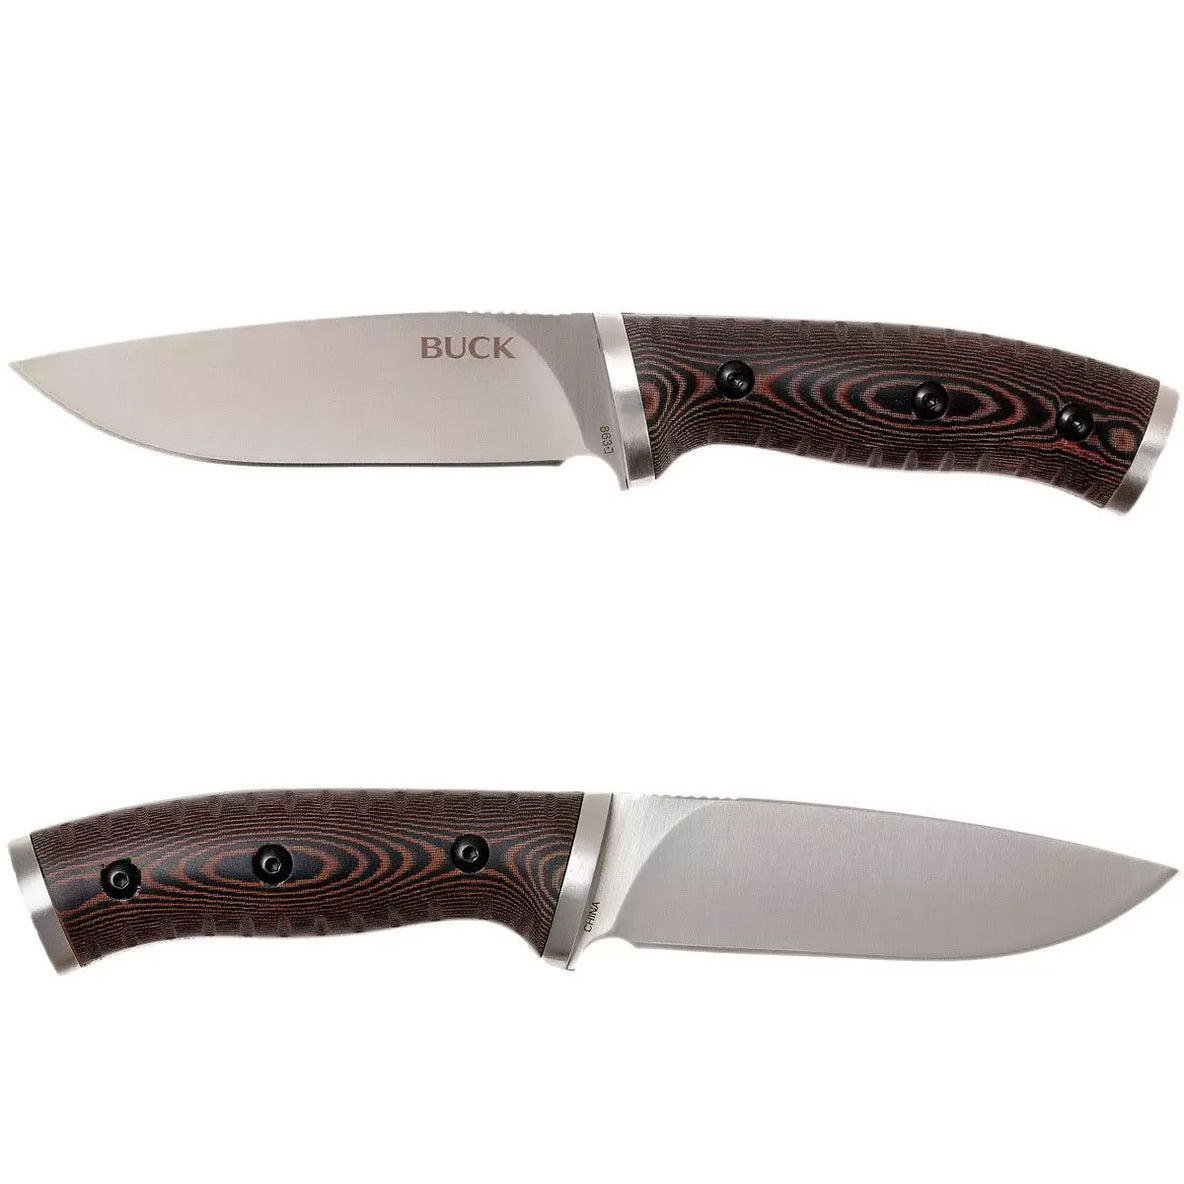 Fixed blade sheath knife Buck Selkirk Knife